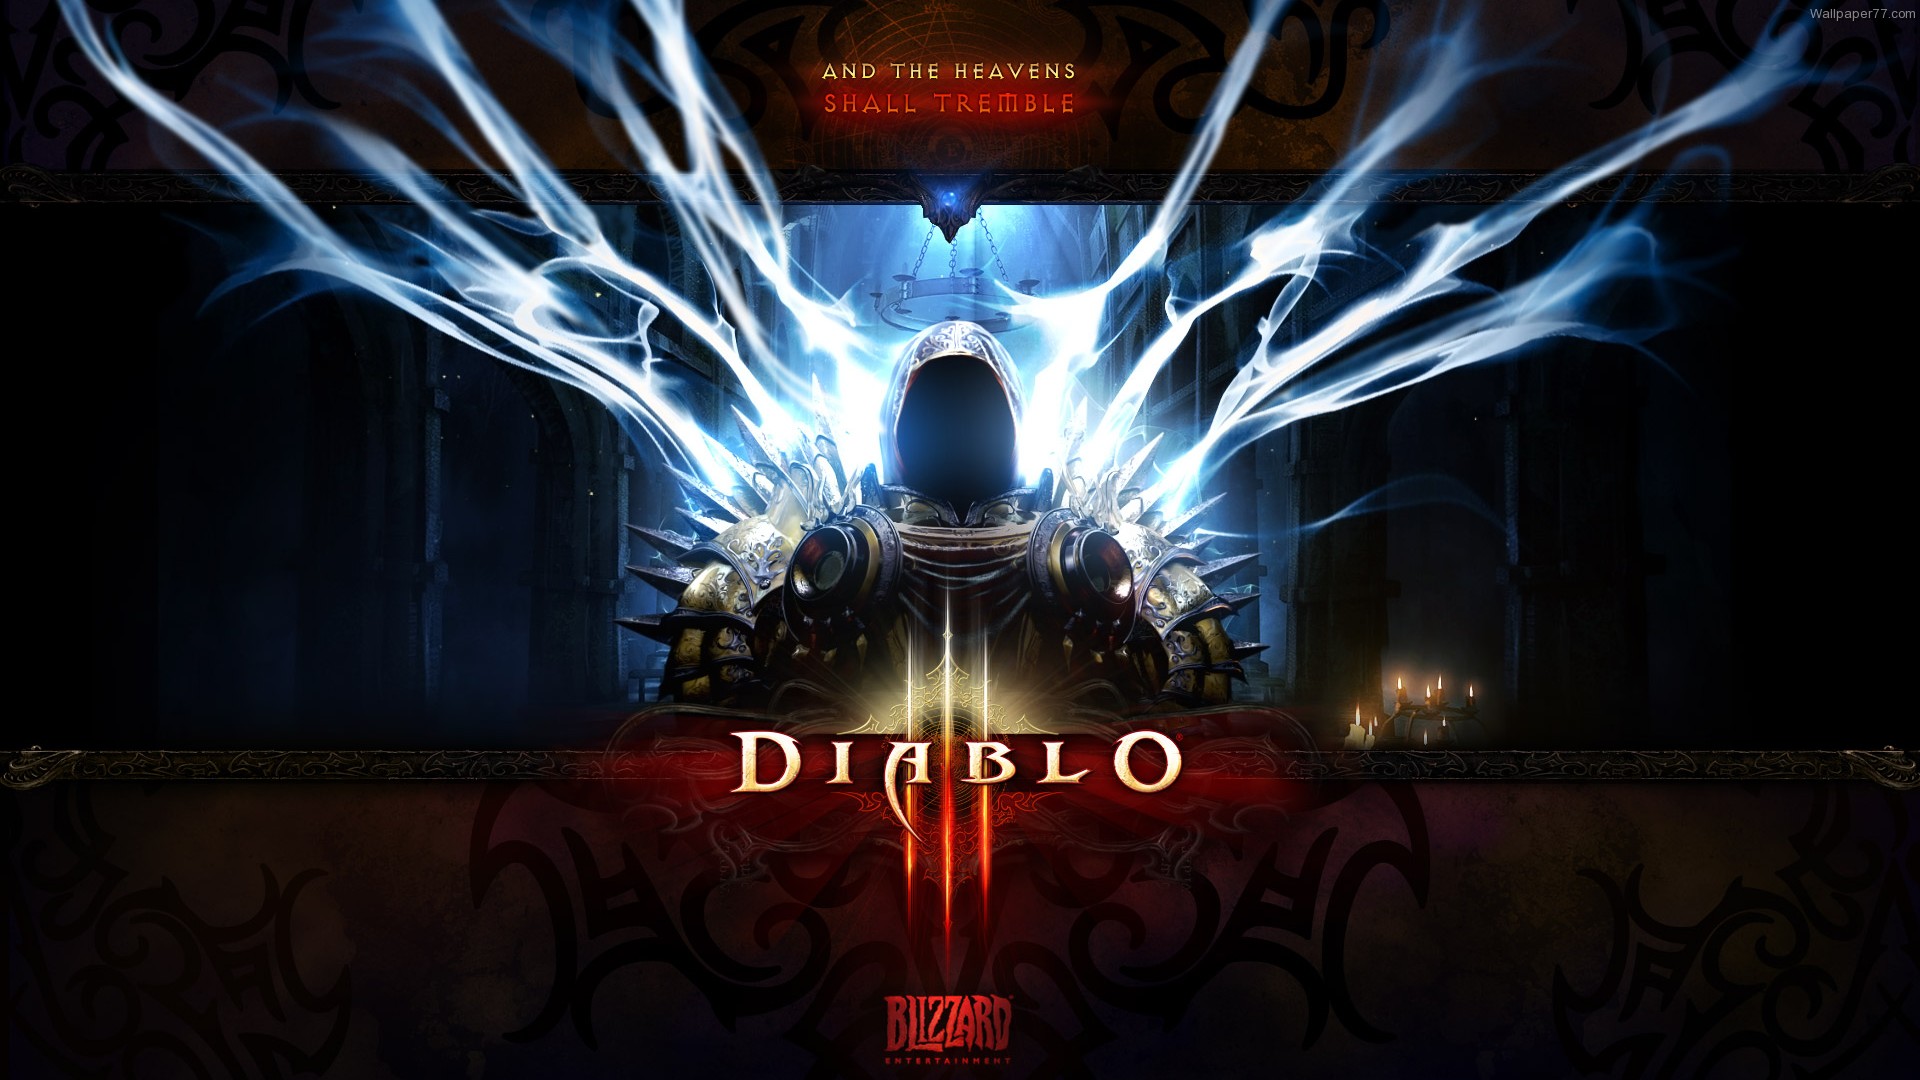 Diablo Wallpaper Game Jpg